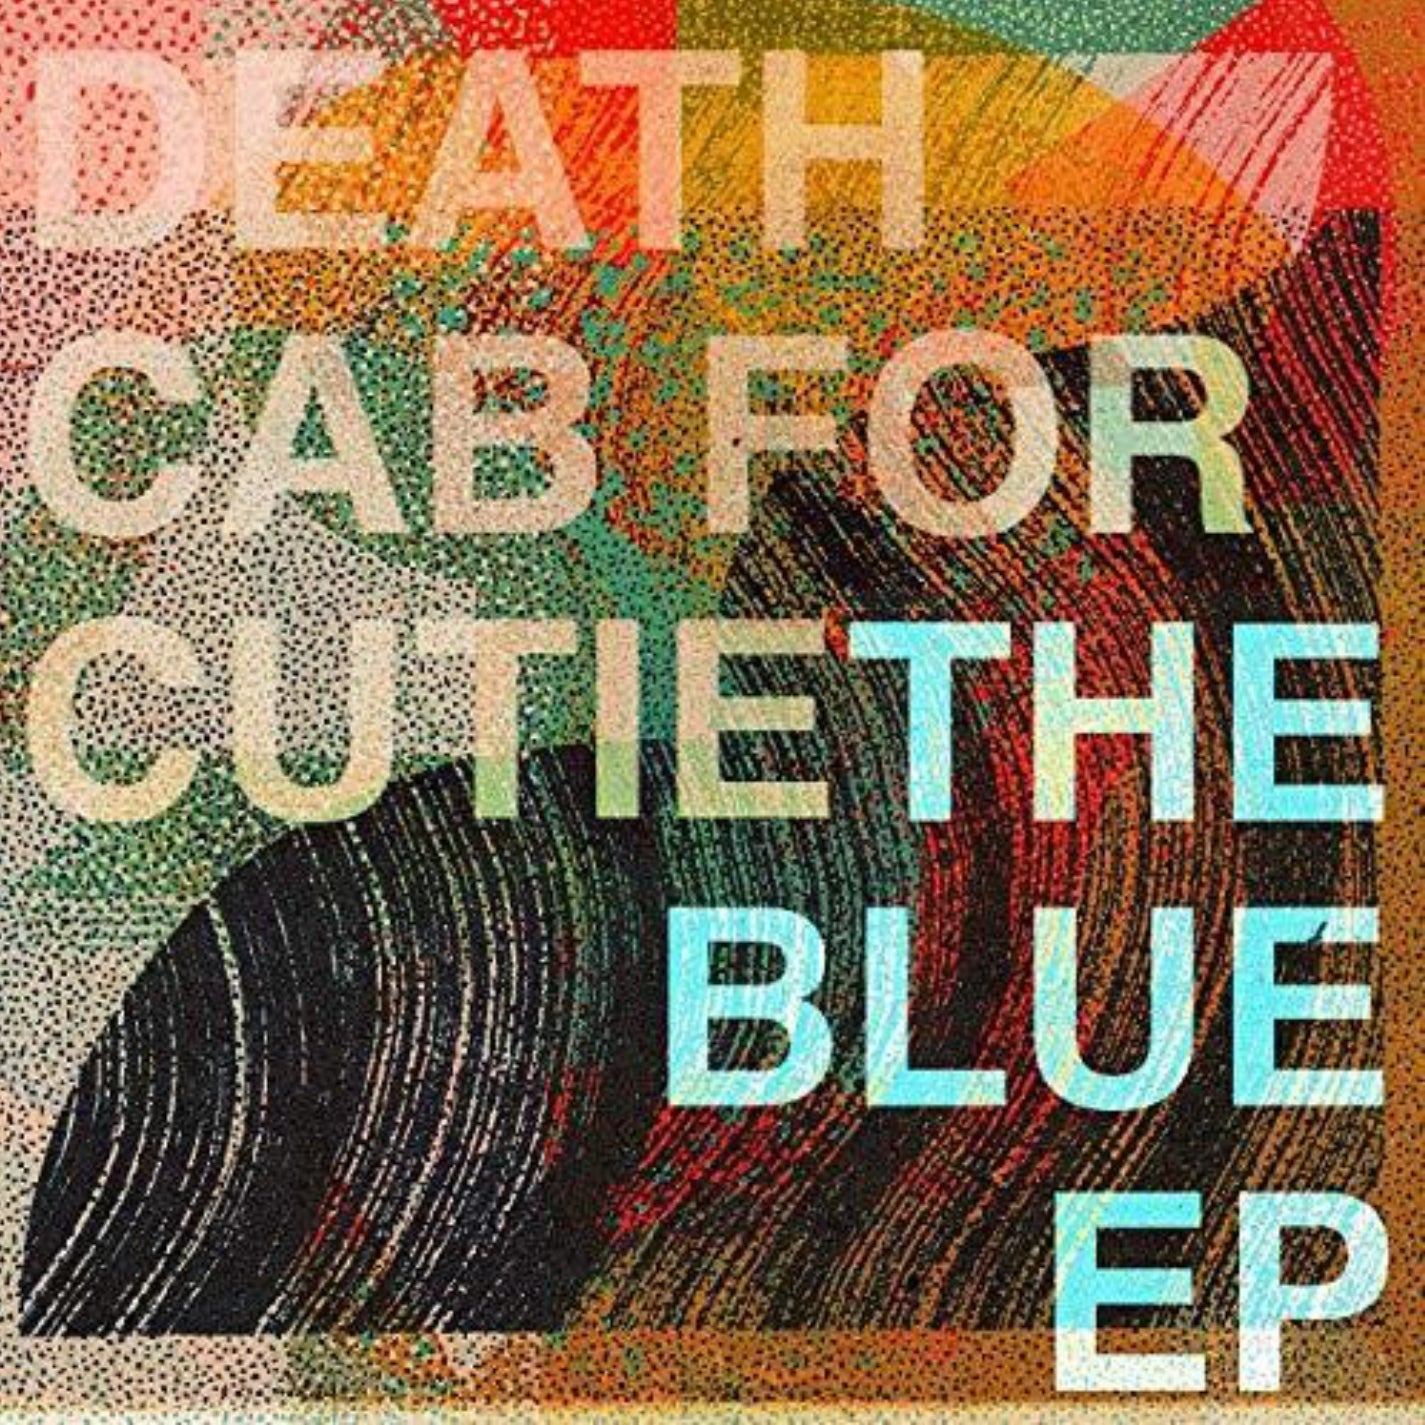 Death Cab for Cutie - Blue EP (Vinyl)